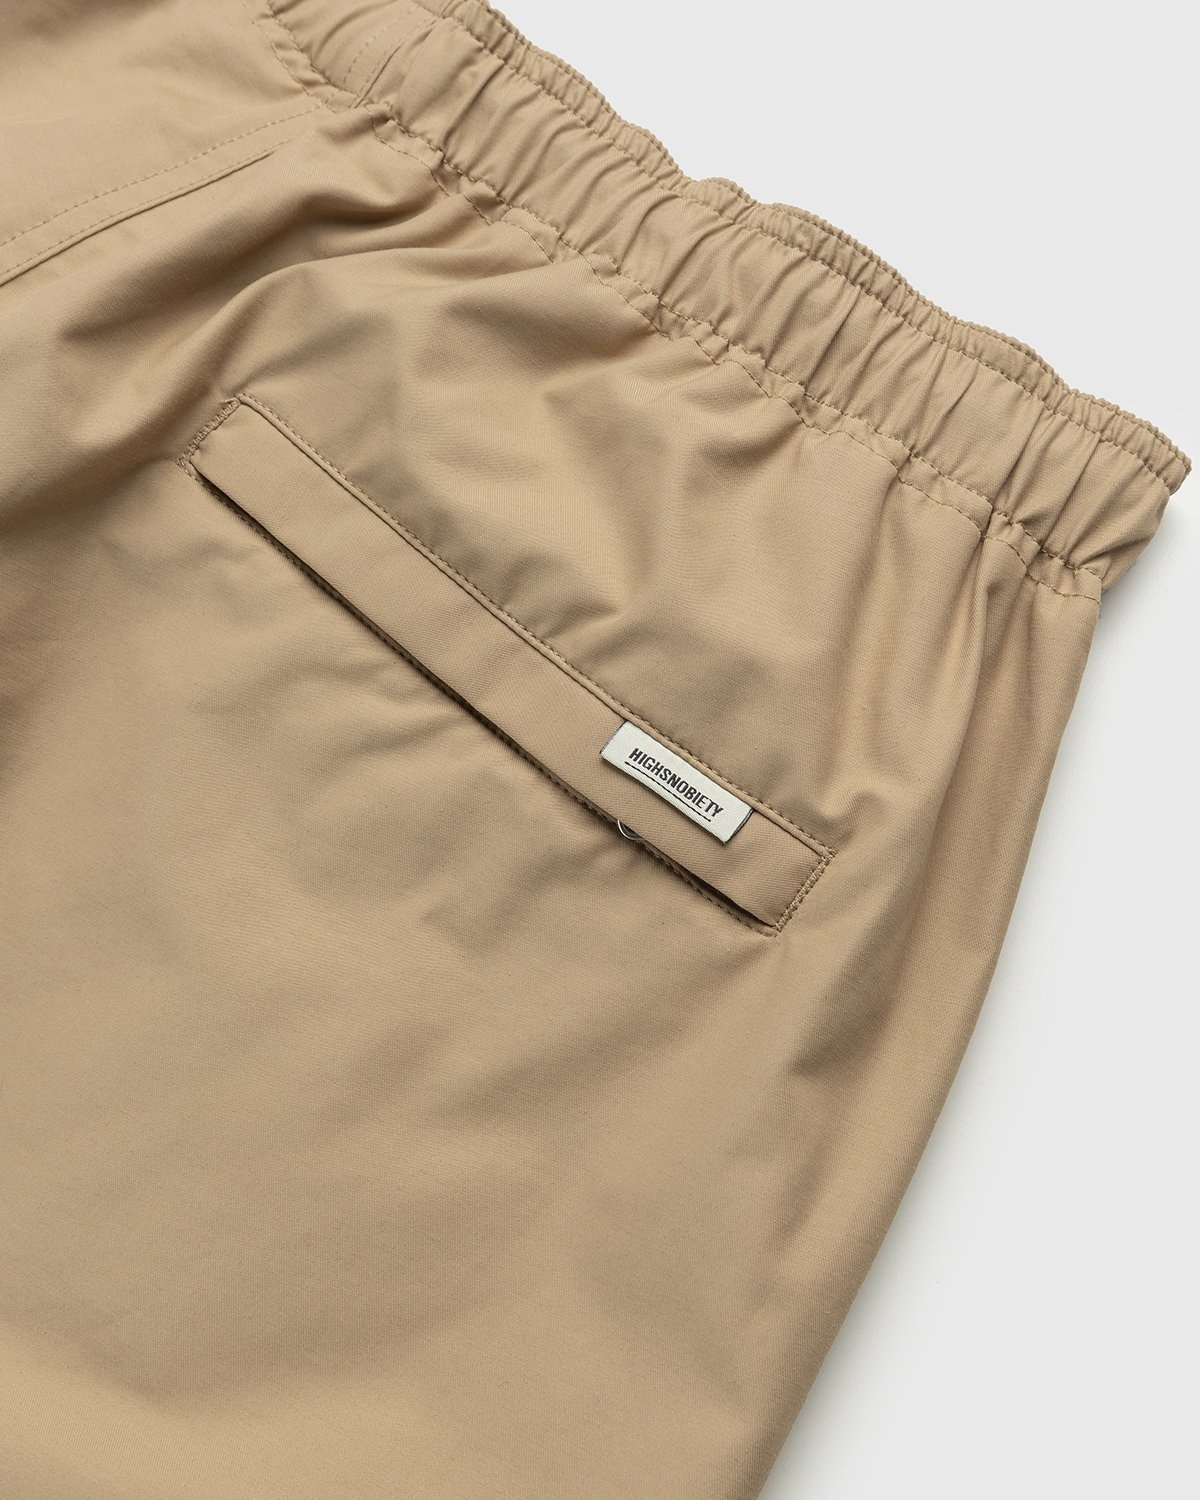 Highsnobiety – Cotton Nylon Water Shorts Beige - Active Shorts - Beige - Image 3